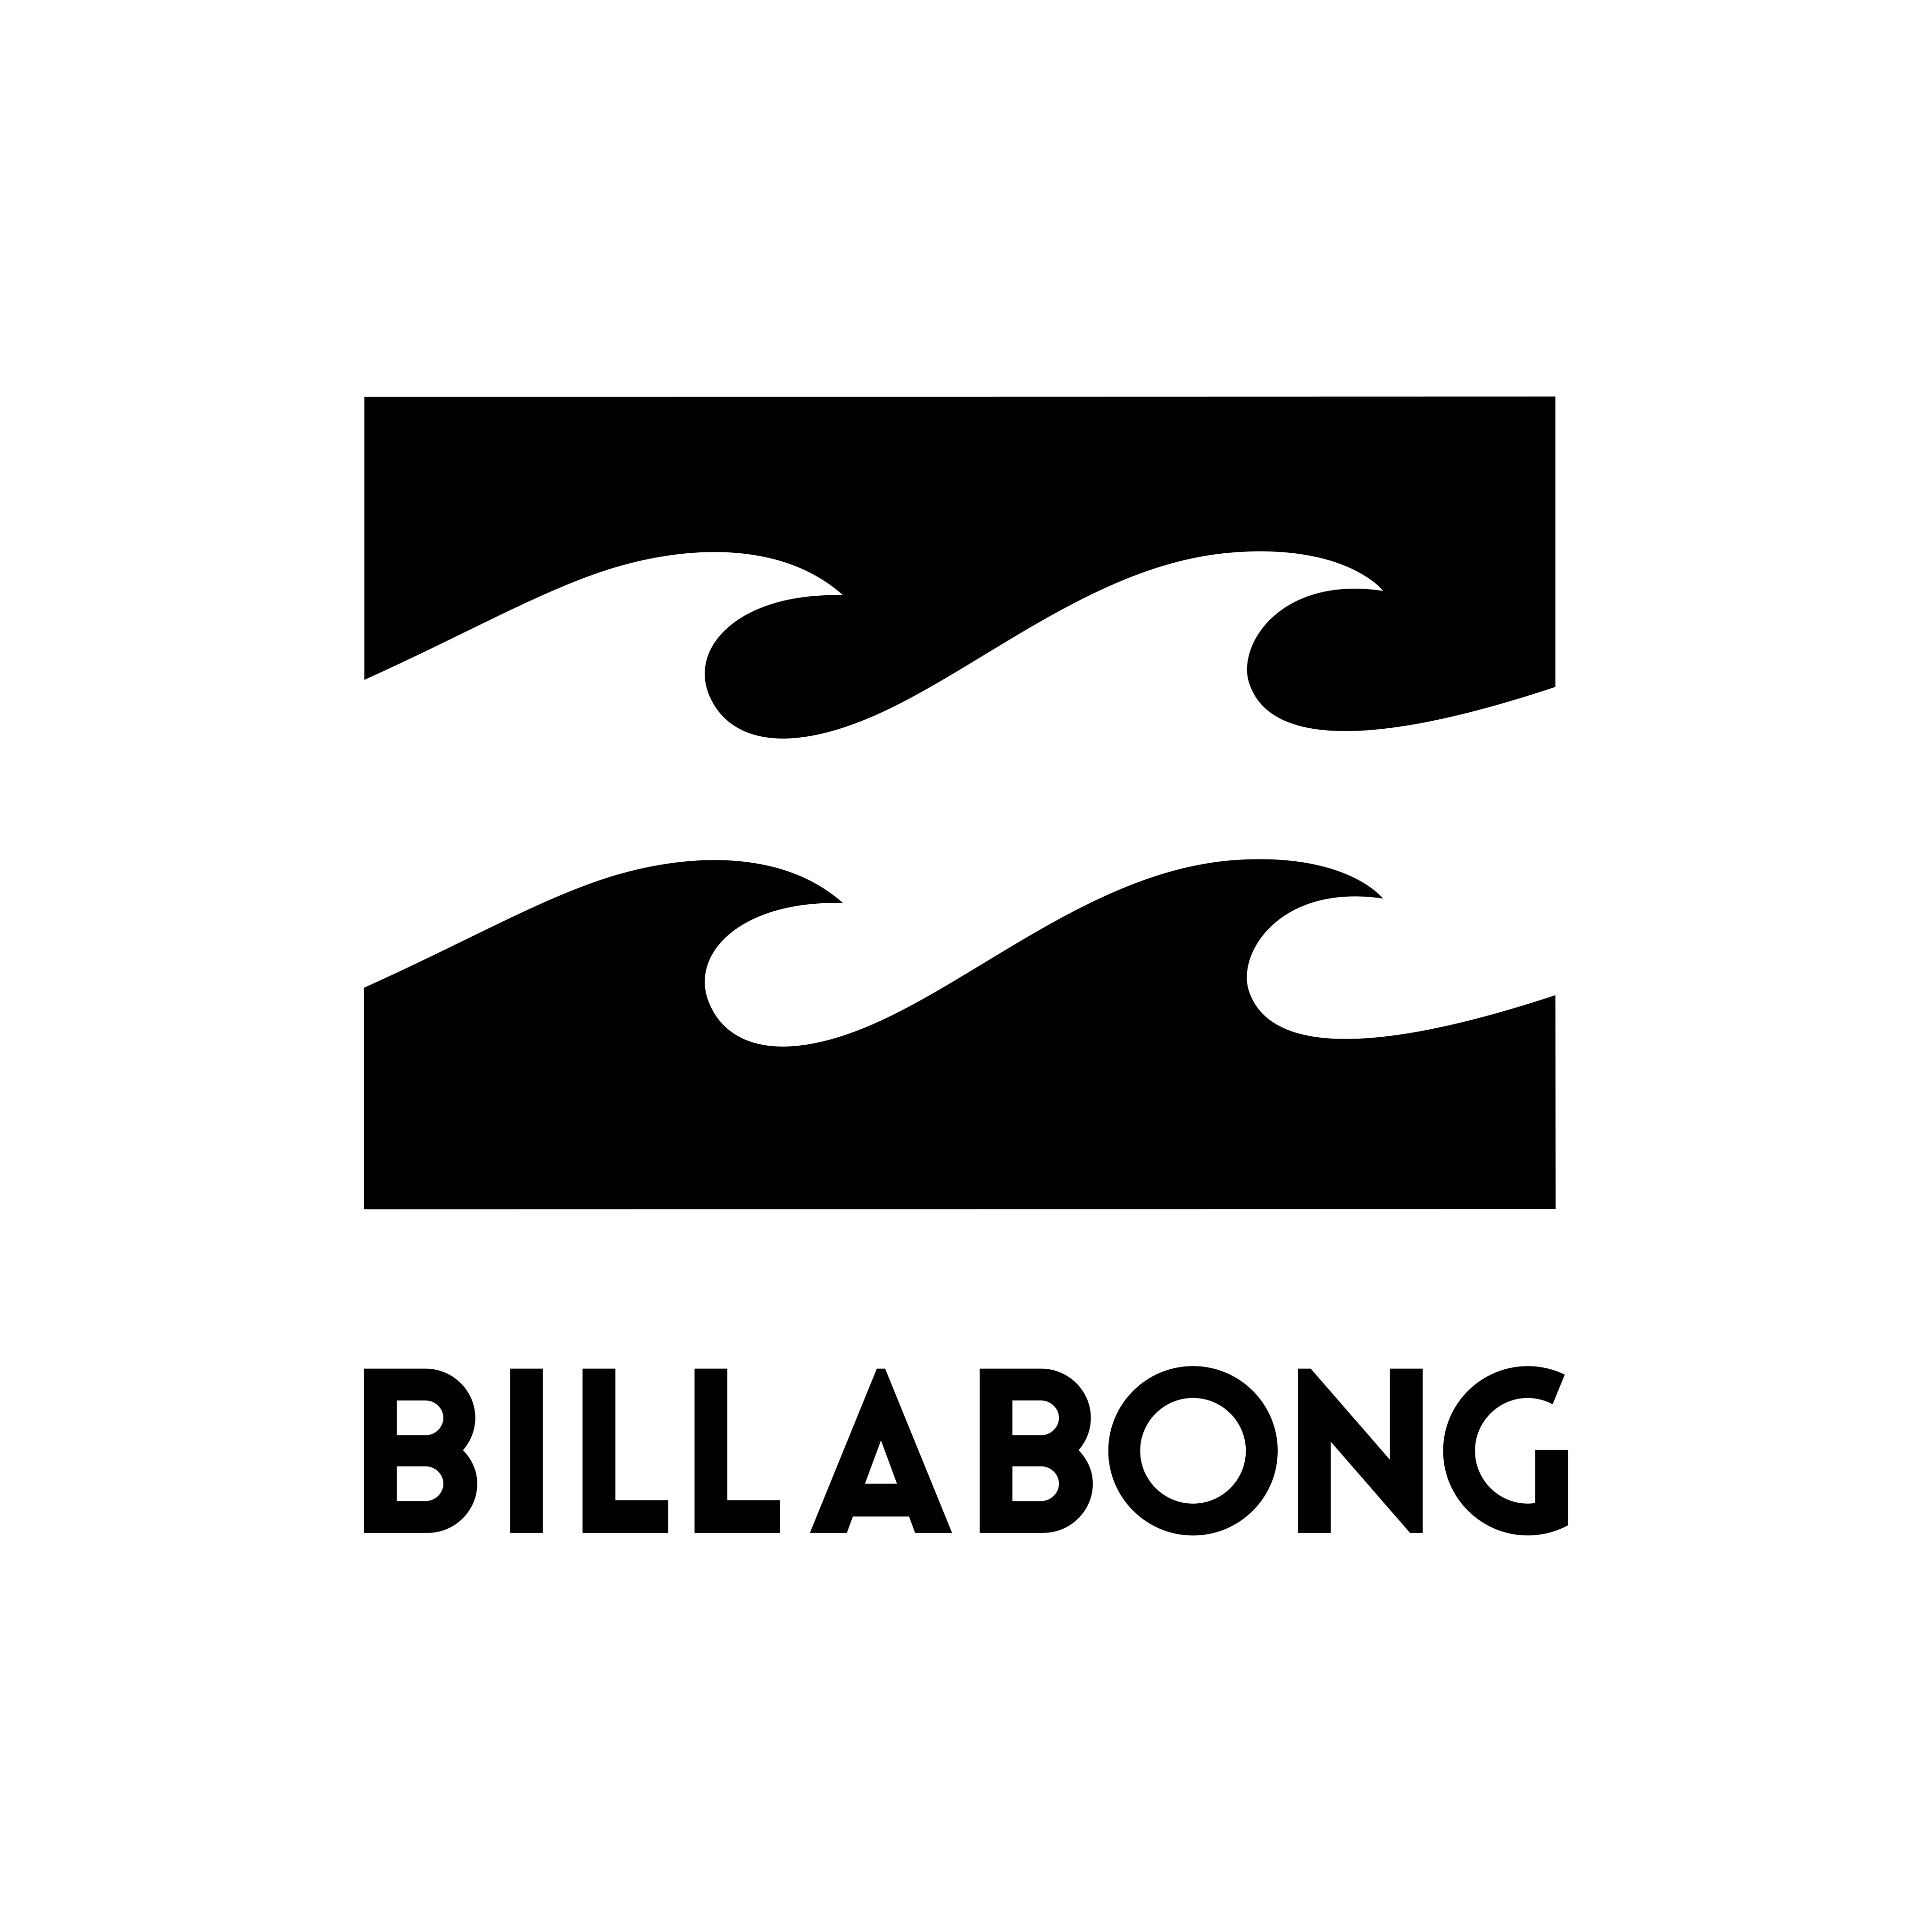 billabong logo 0 - Billabong Logo